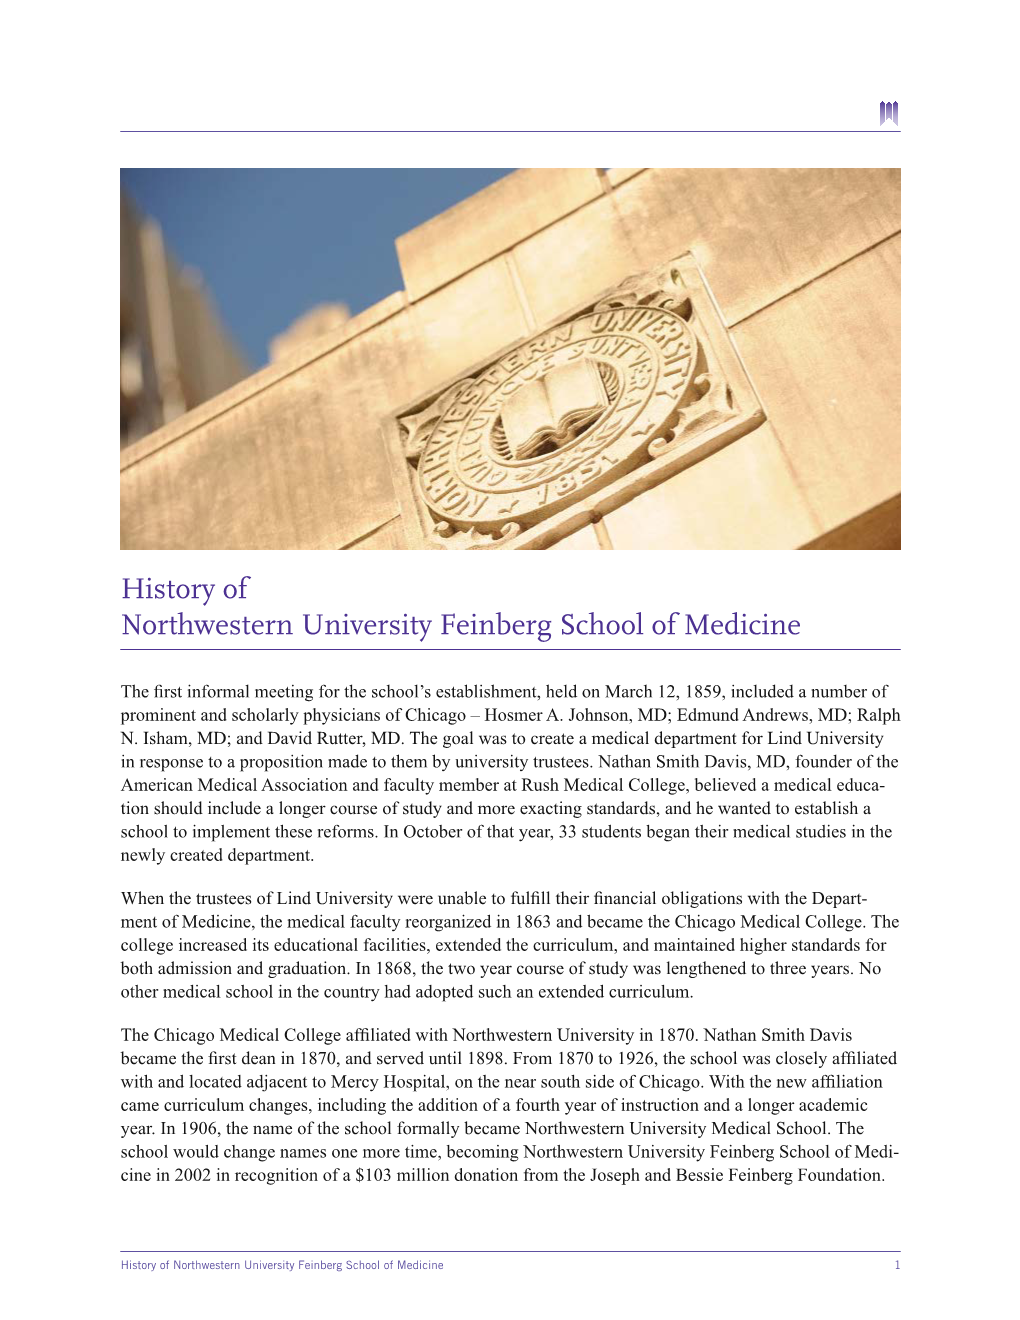 History of Northwestern University Feinberg School of Medicine